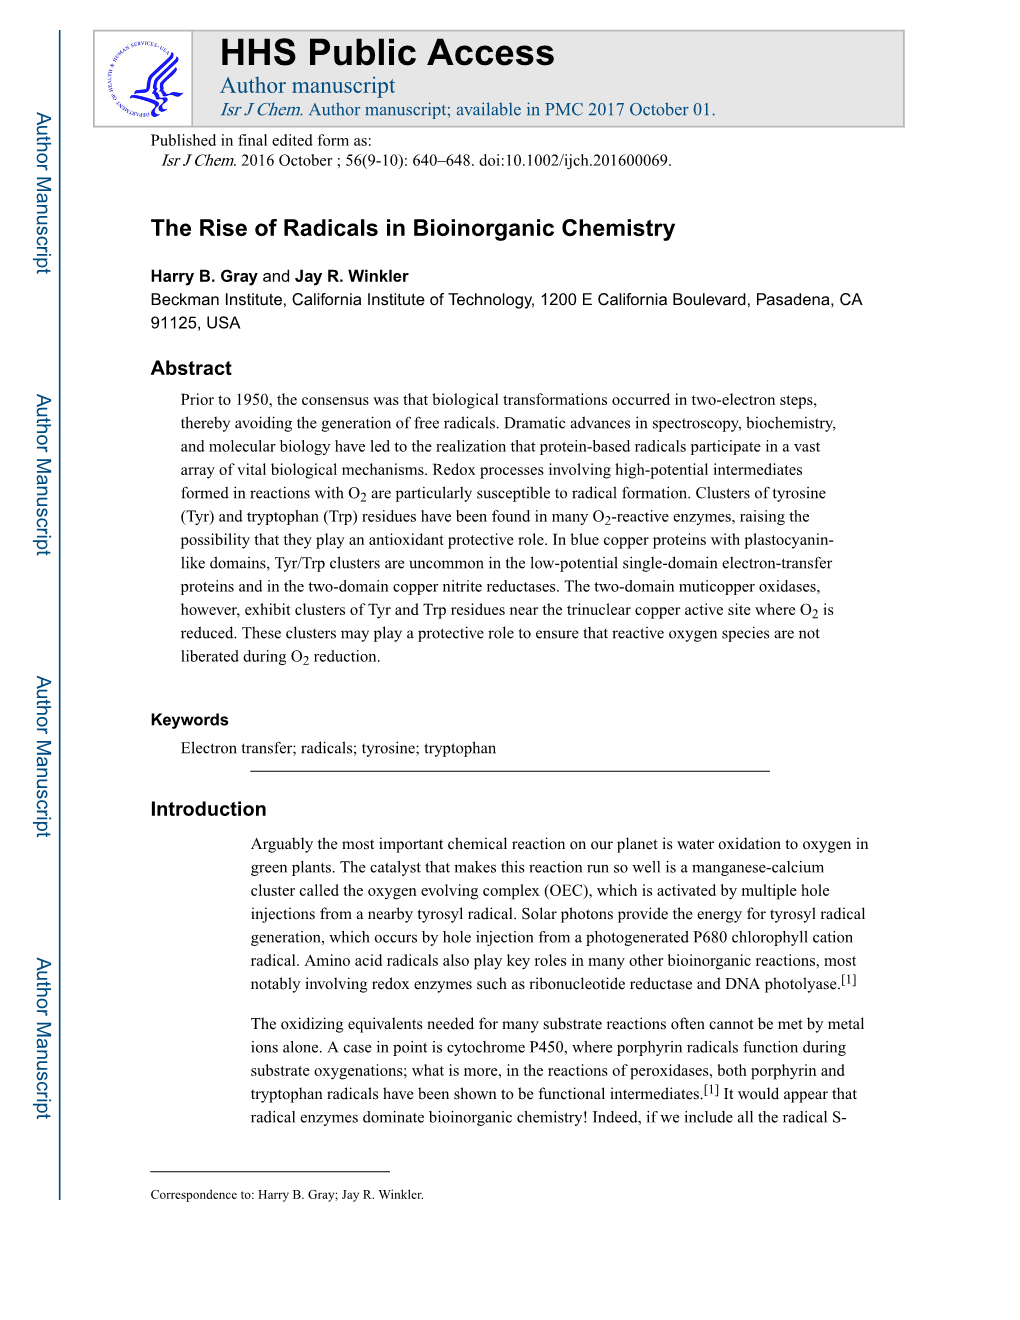 The Rise of Radicals in Bioinorganic Chemistry